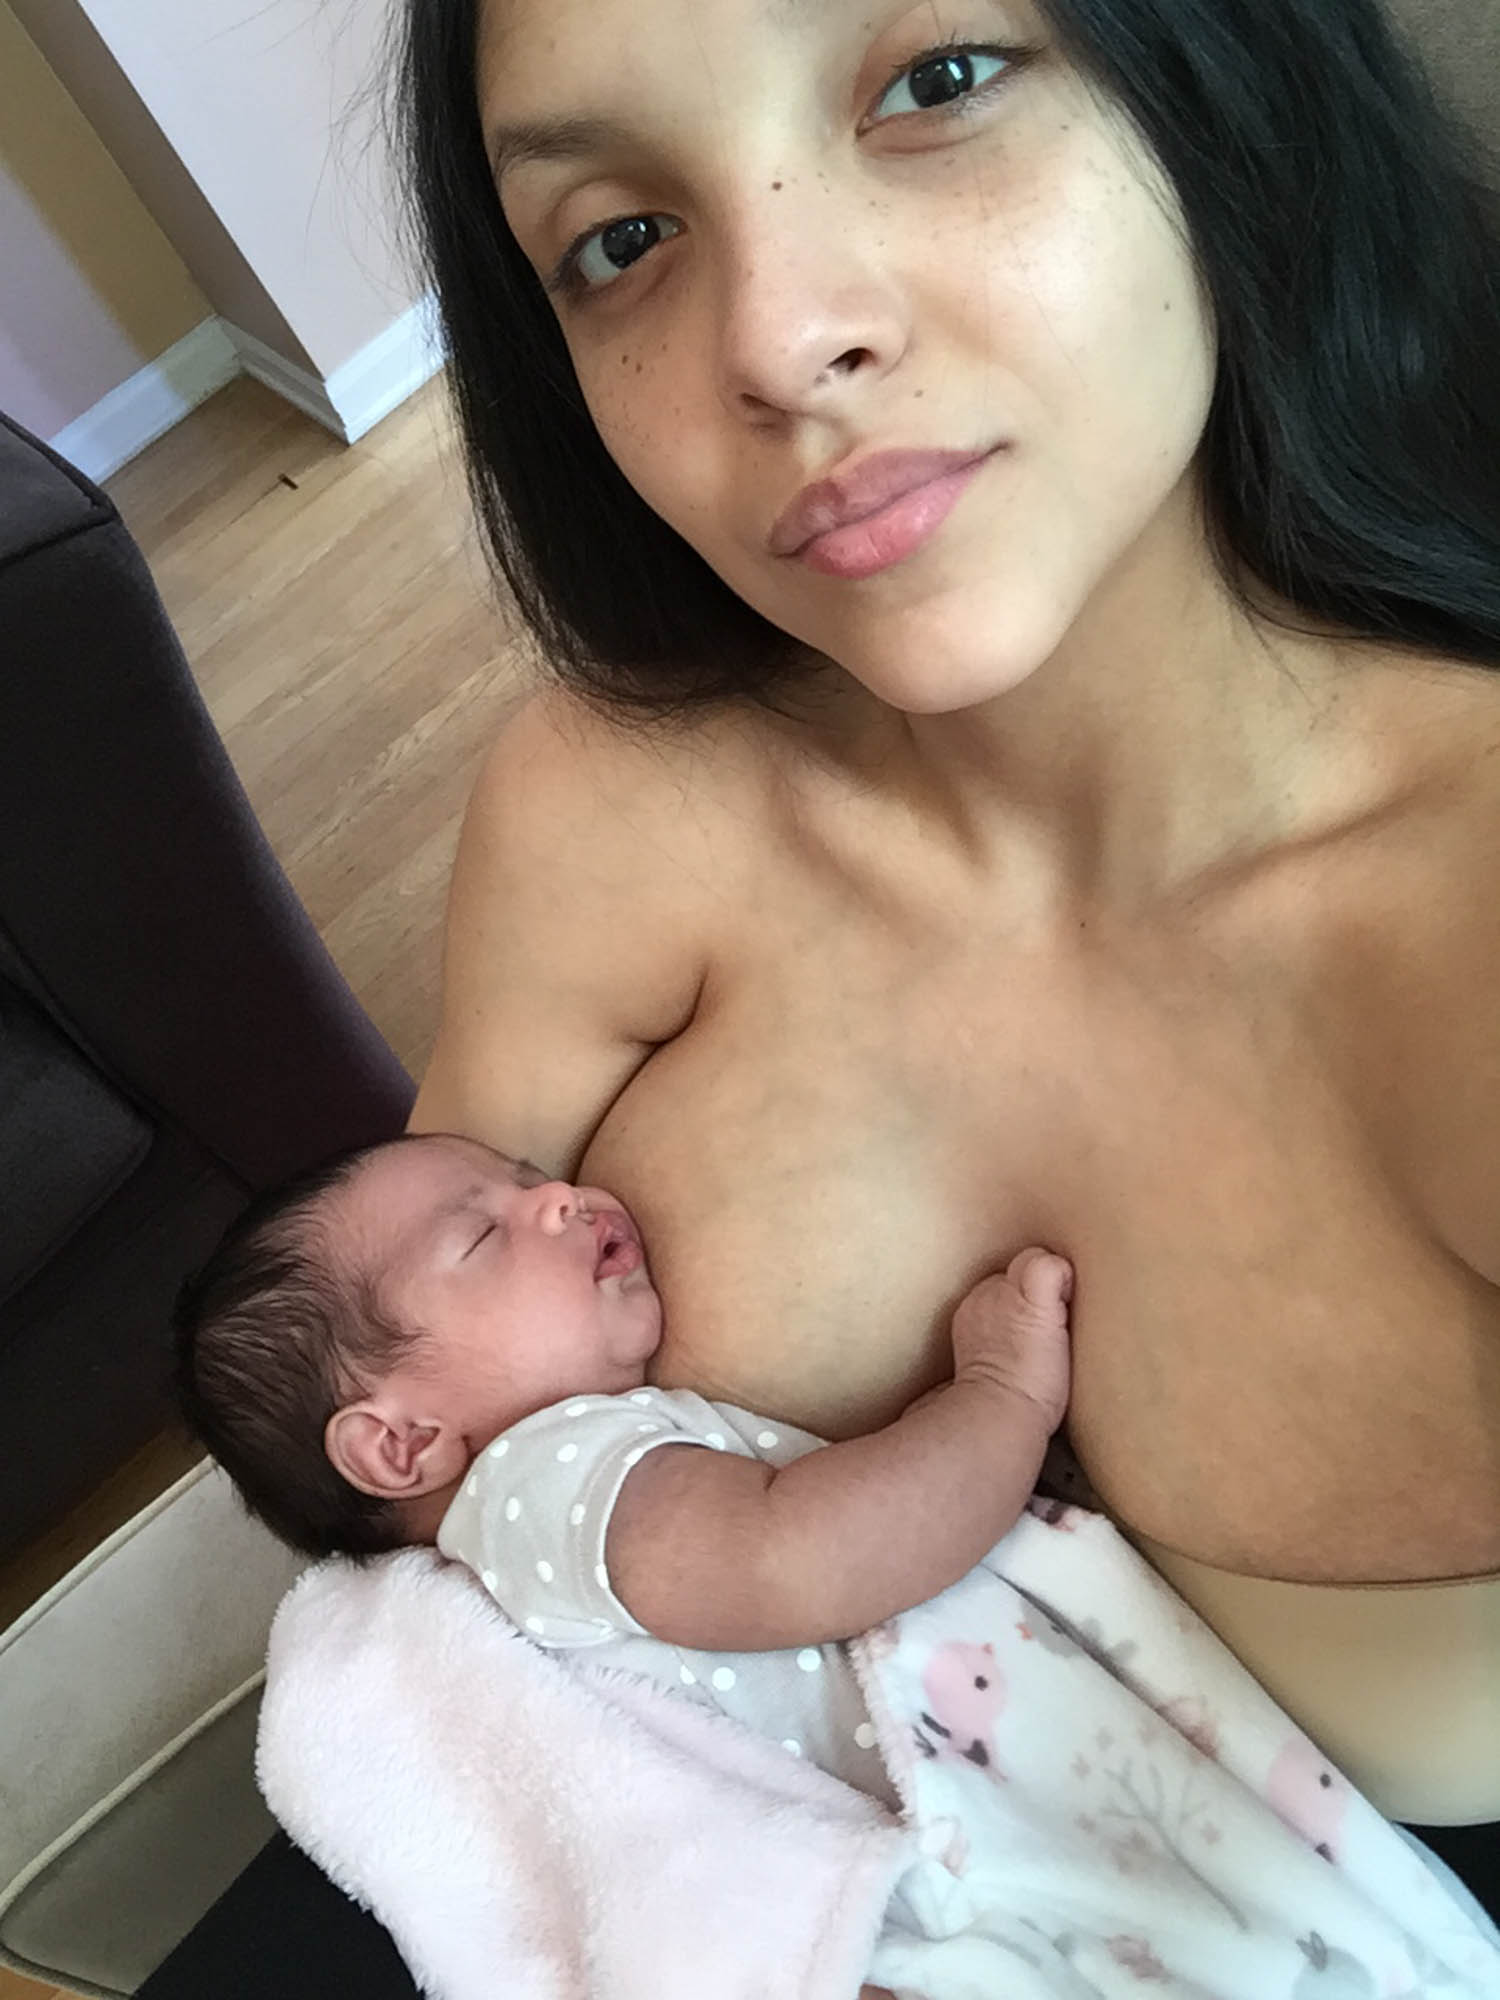 breastfed baby